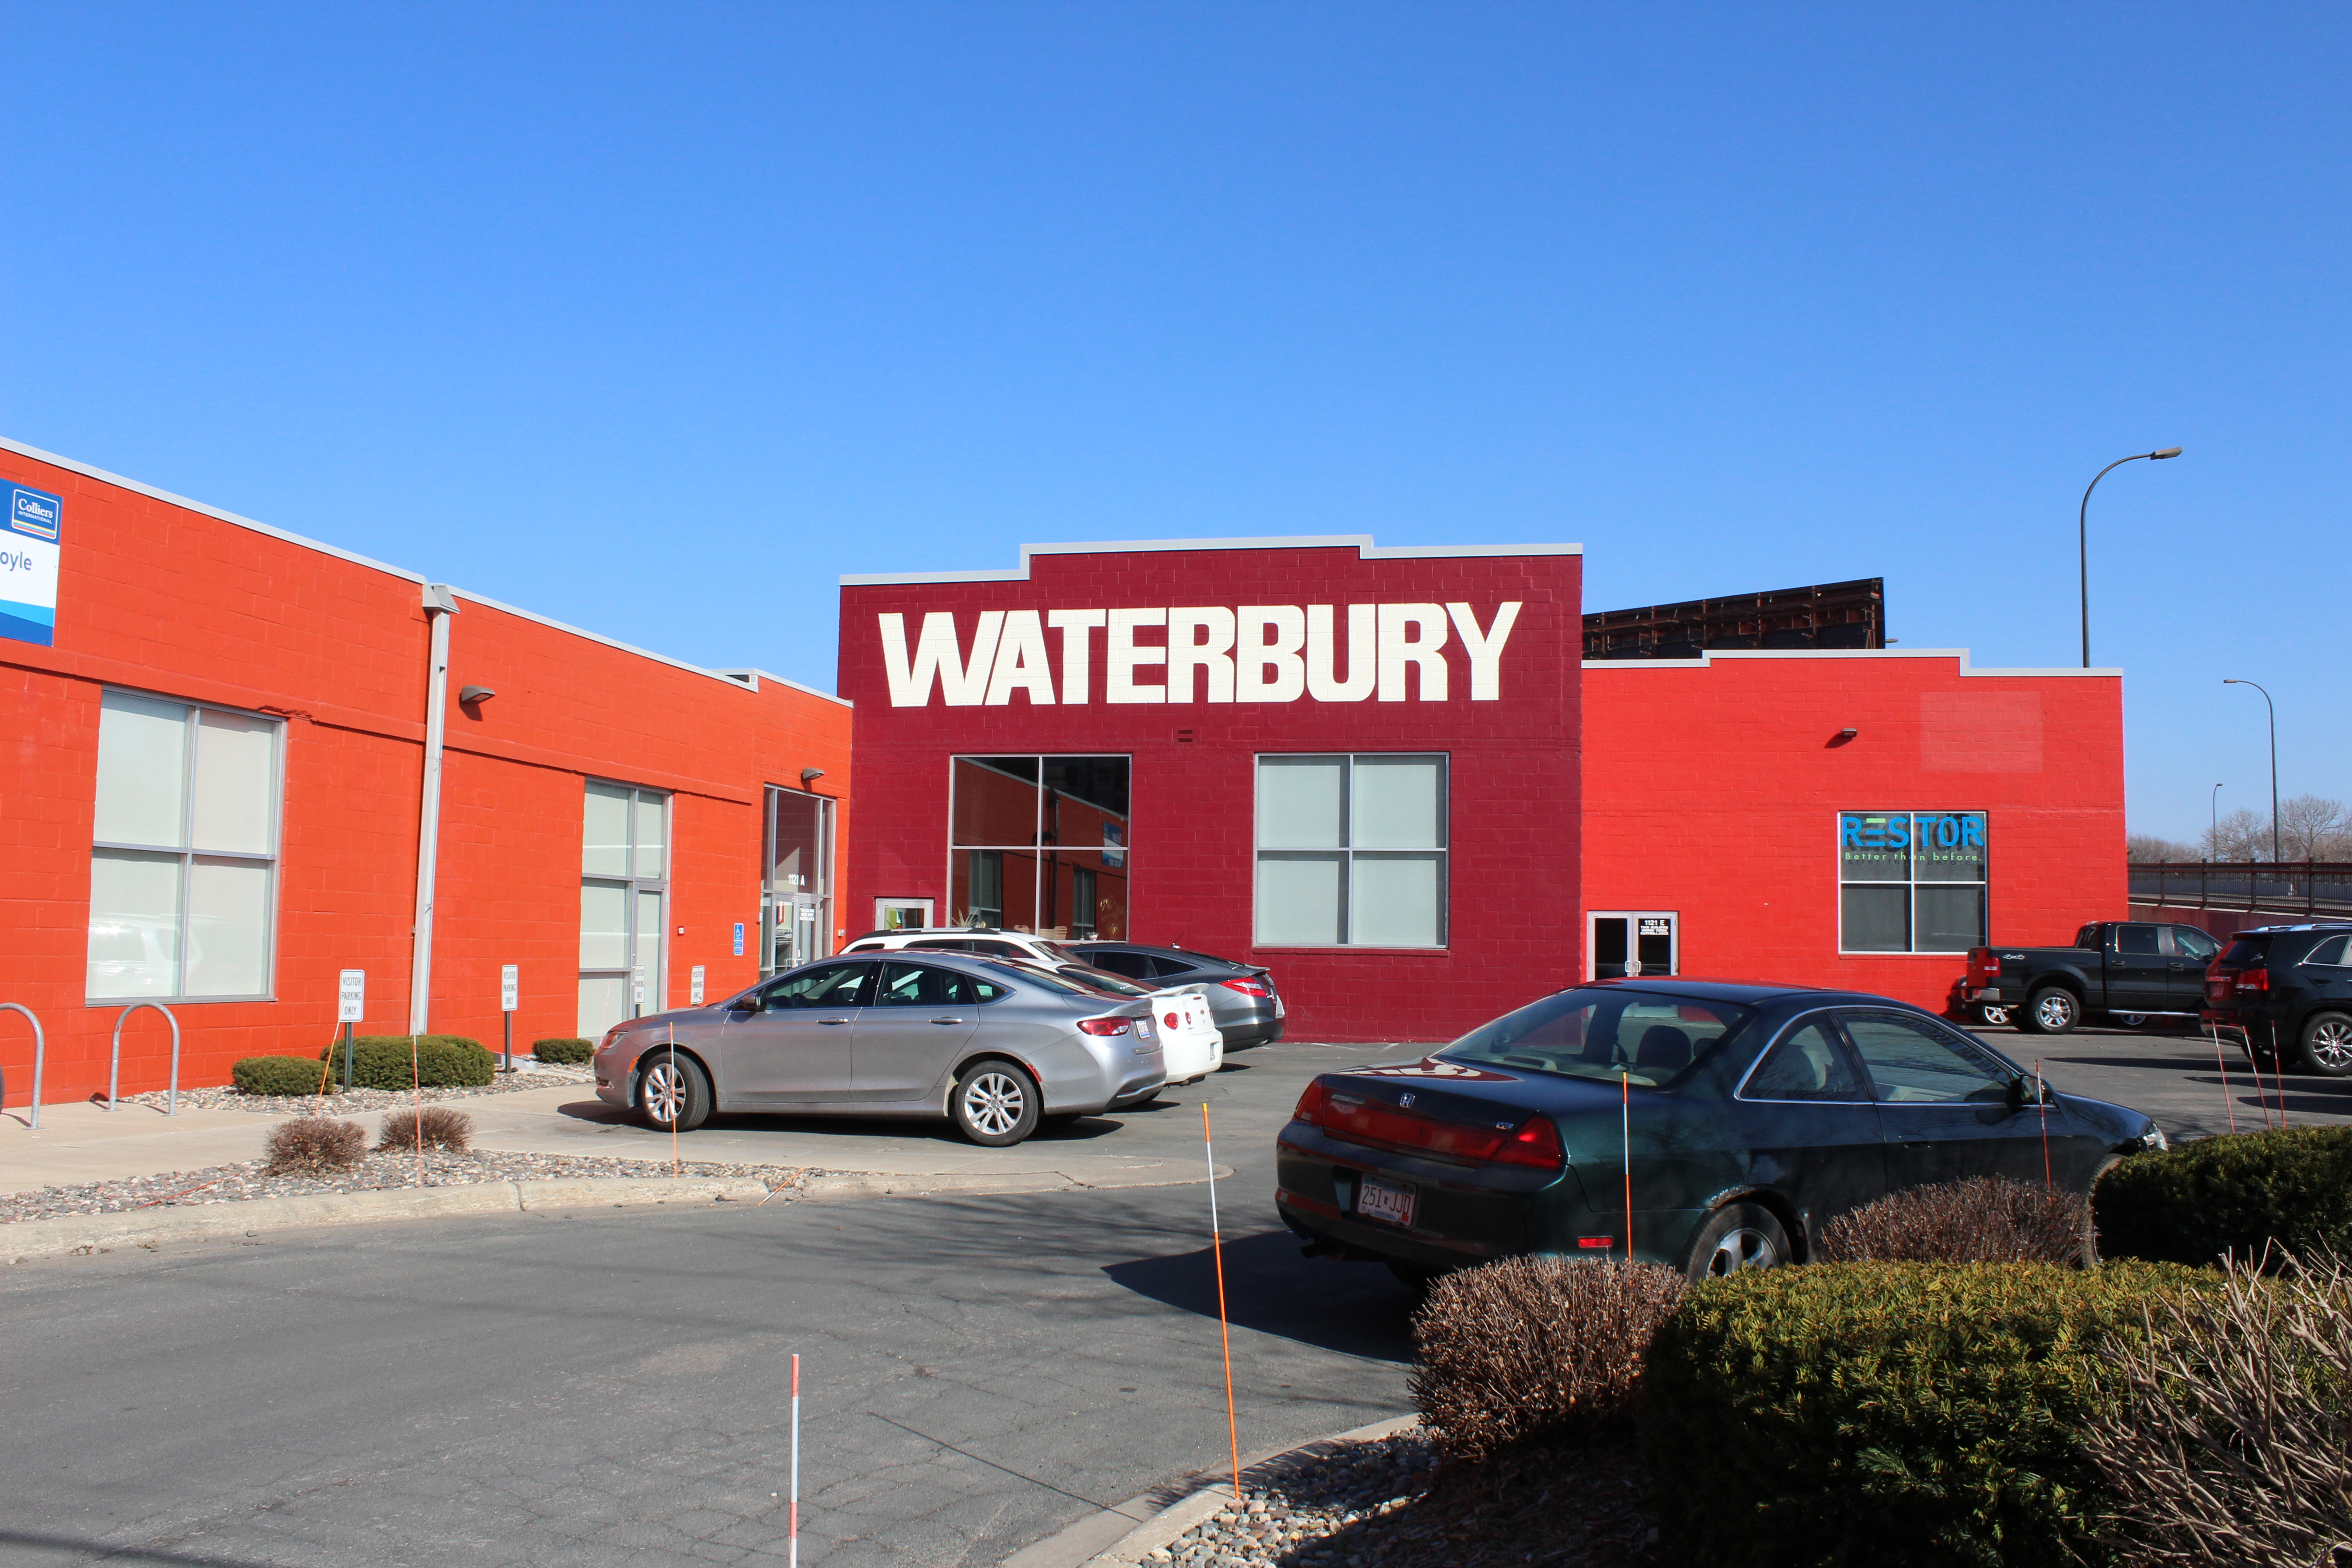 Waterbury building exterior and parking lot